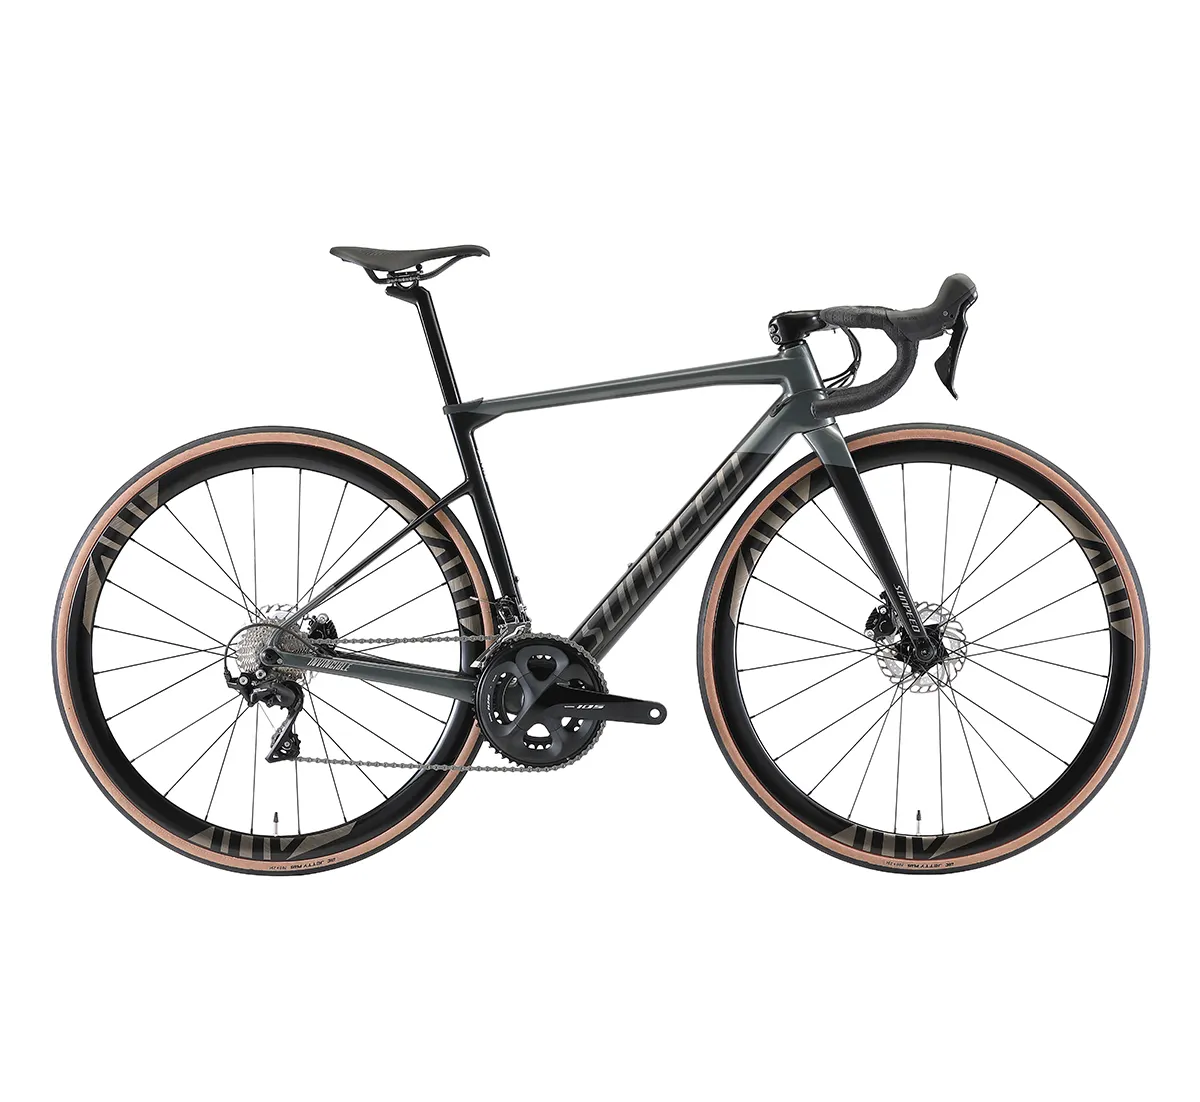 SUNPEED-bicicleta profesional de carreras, bici de fibra de carbono de 22 velocidades, 700C, material de fibra de carbono, marco de bicicleta de carretera